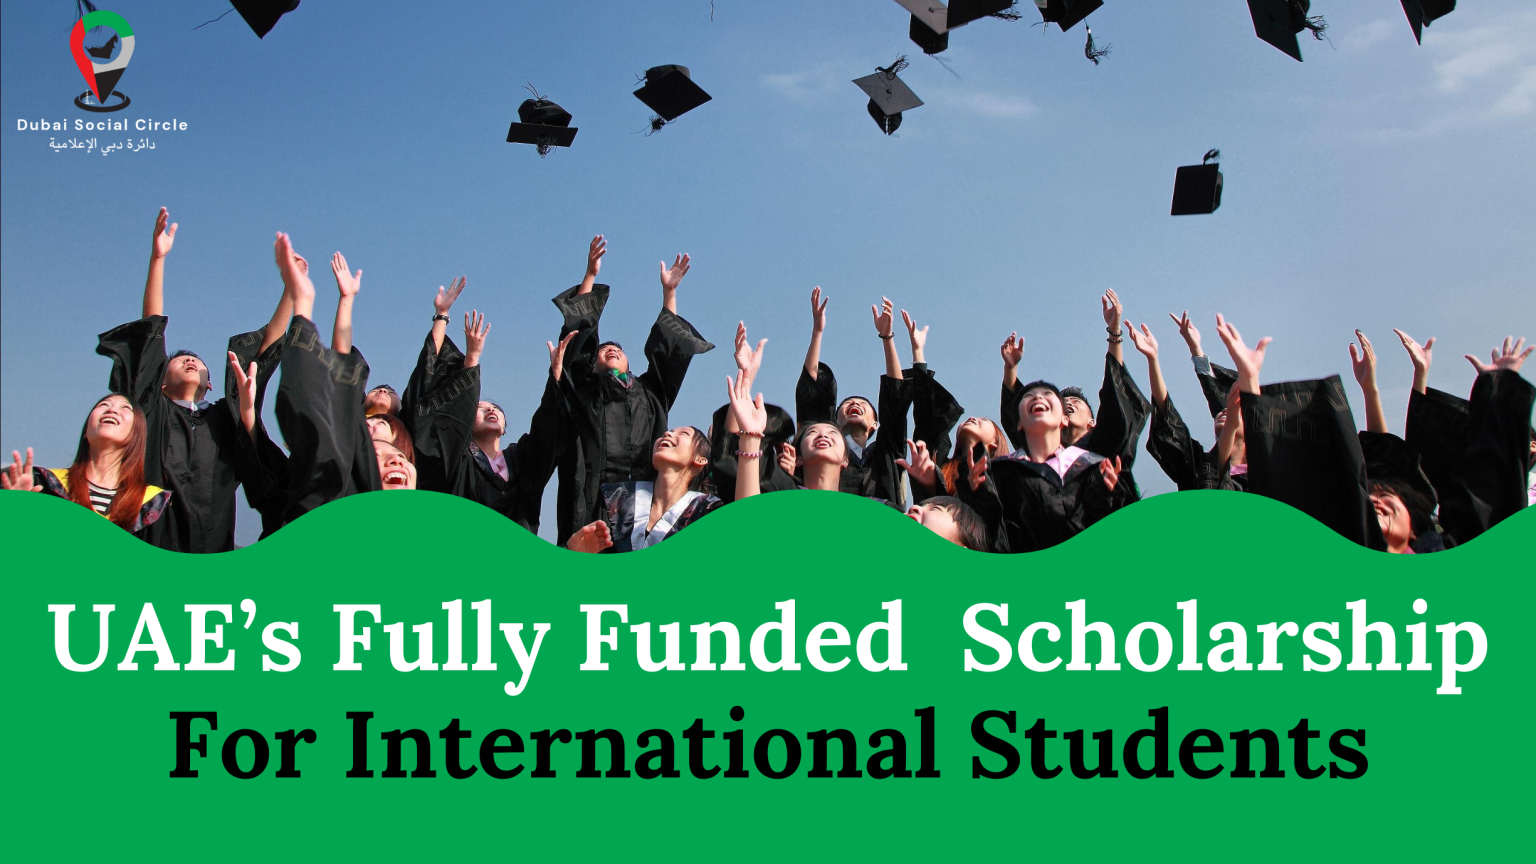 UAEs Scholarship Programs For International Students Dubai  1536x864 